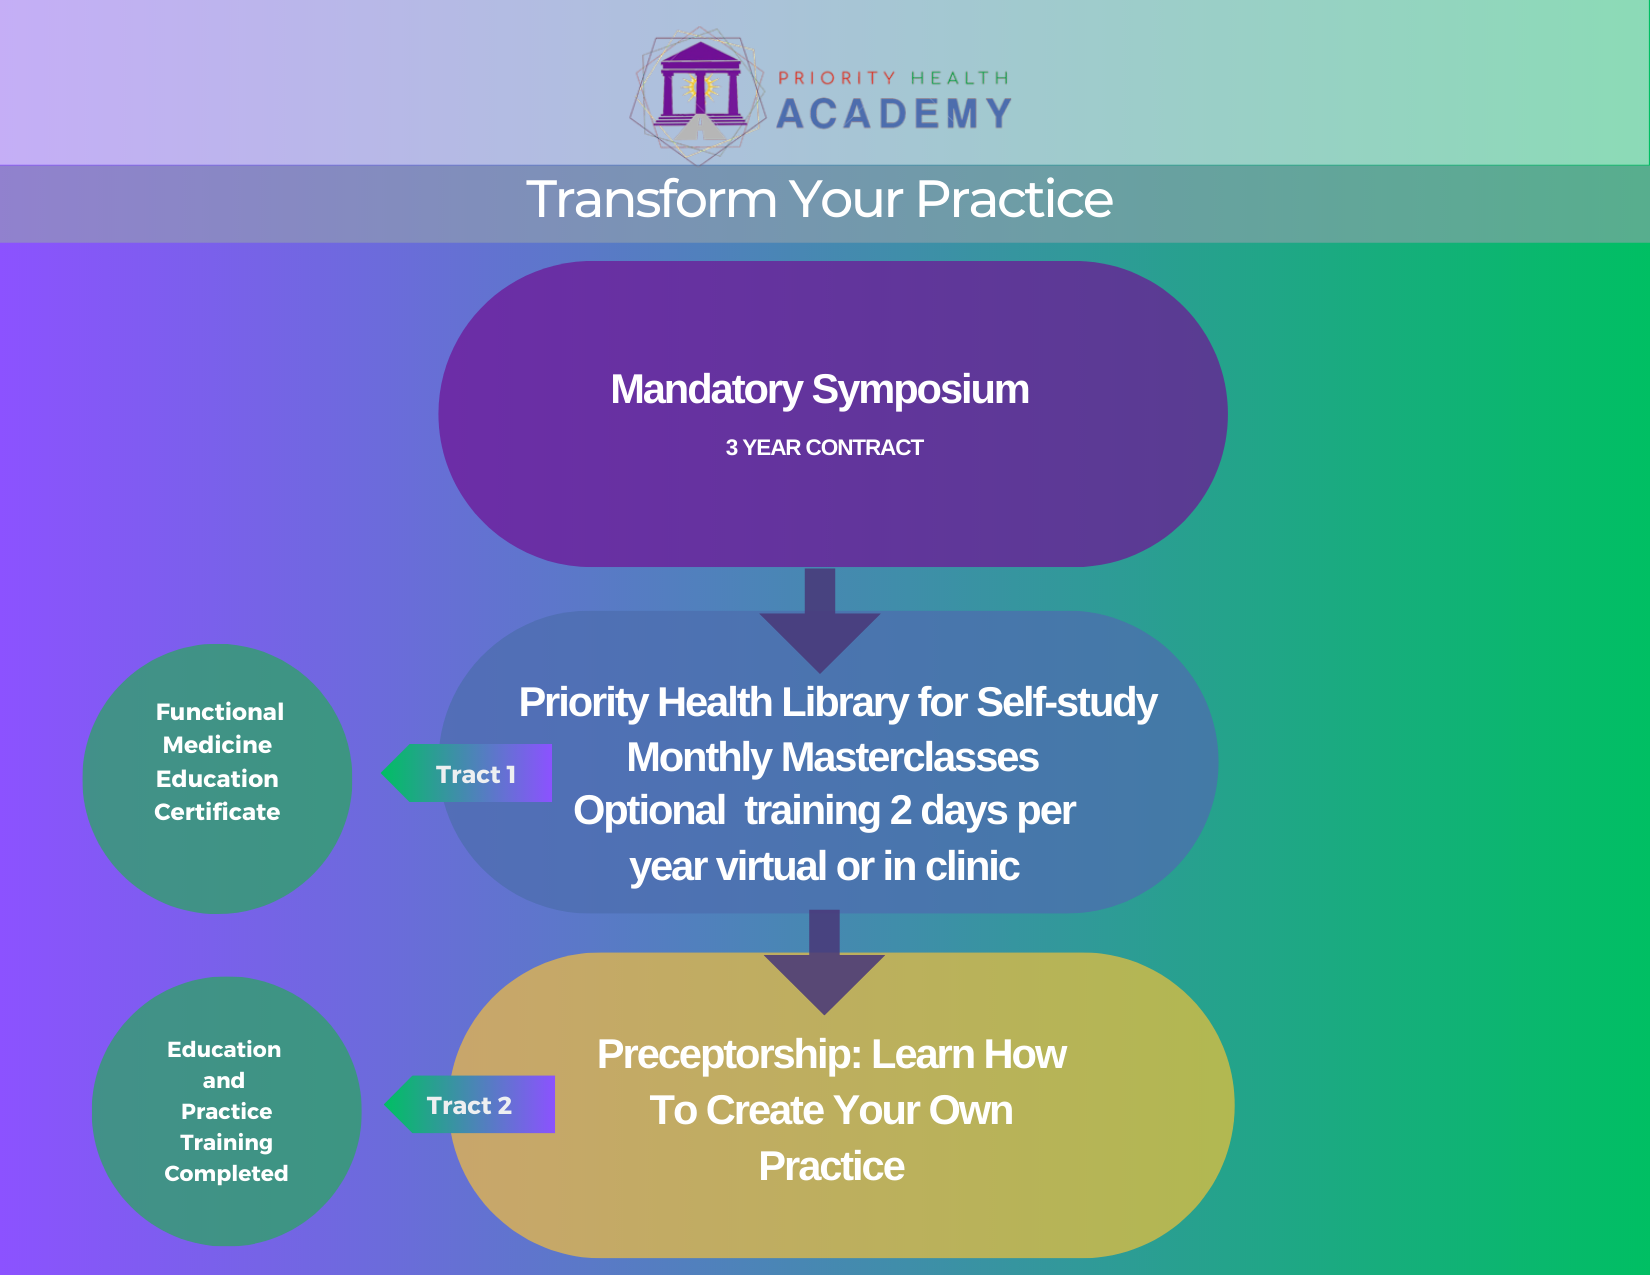 Academy Priority Health Academy